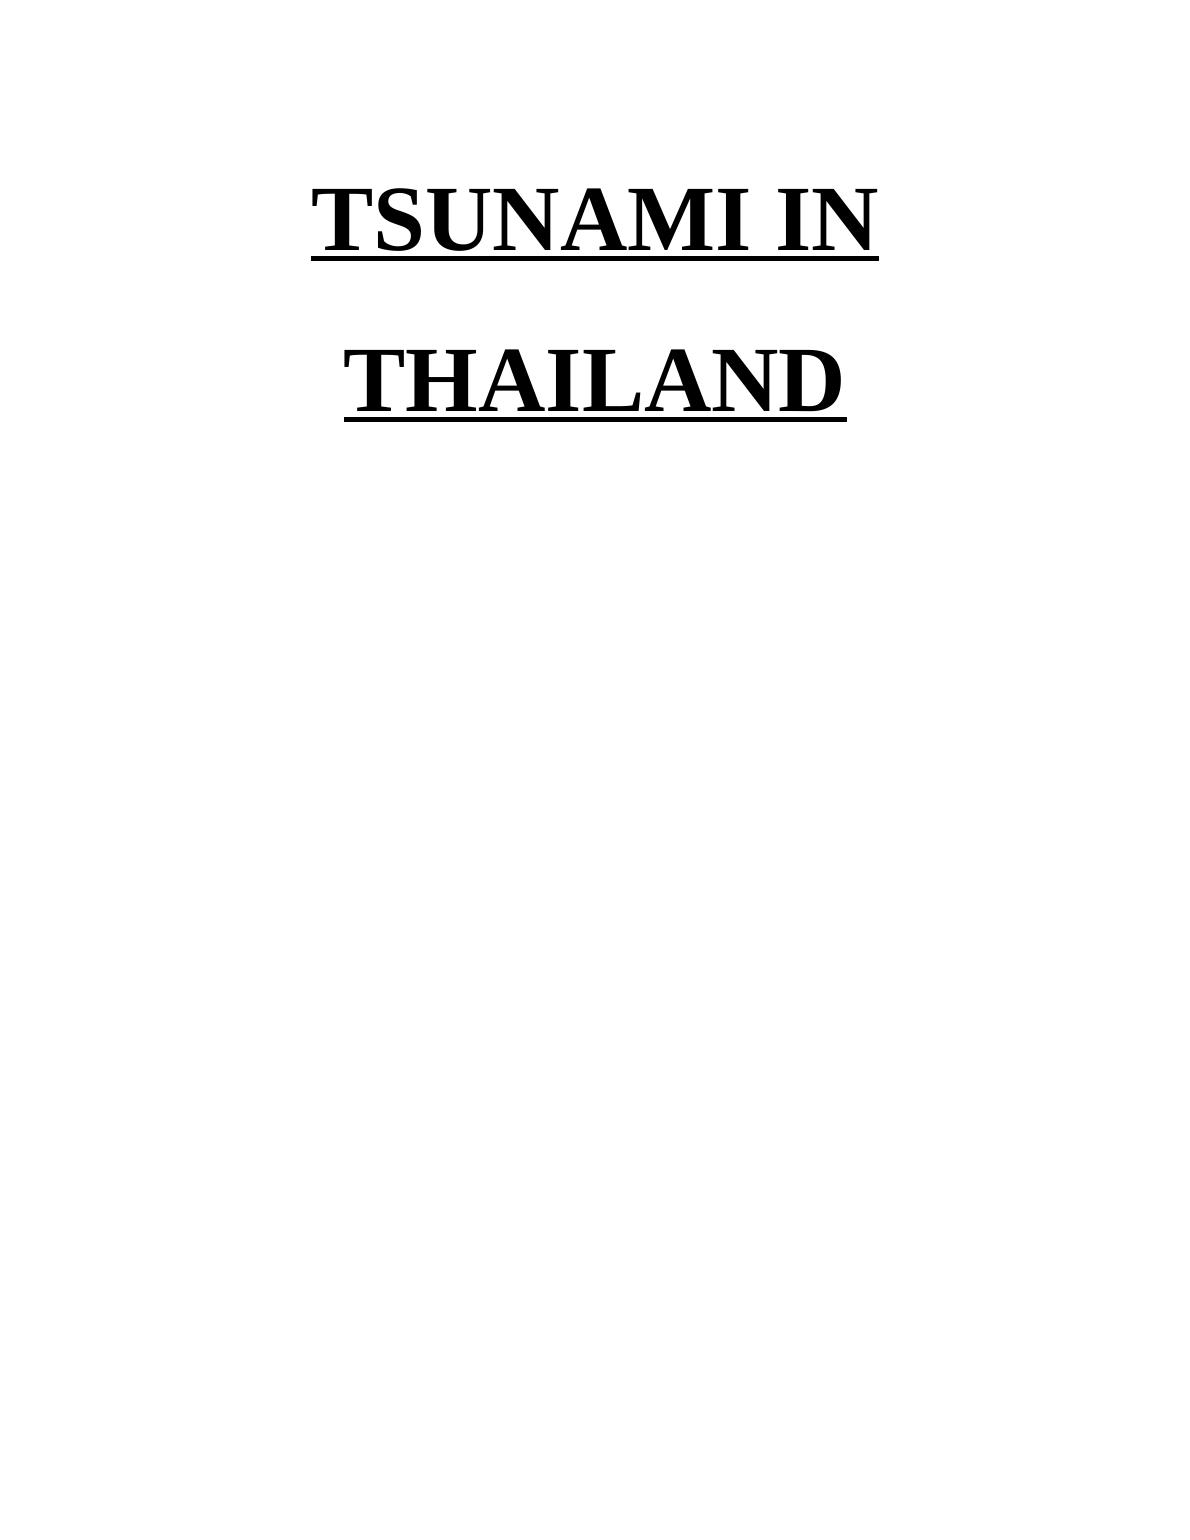 Tsunami in Thailand - Essay_1